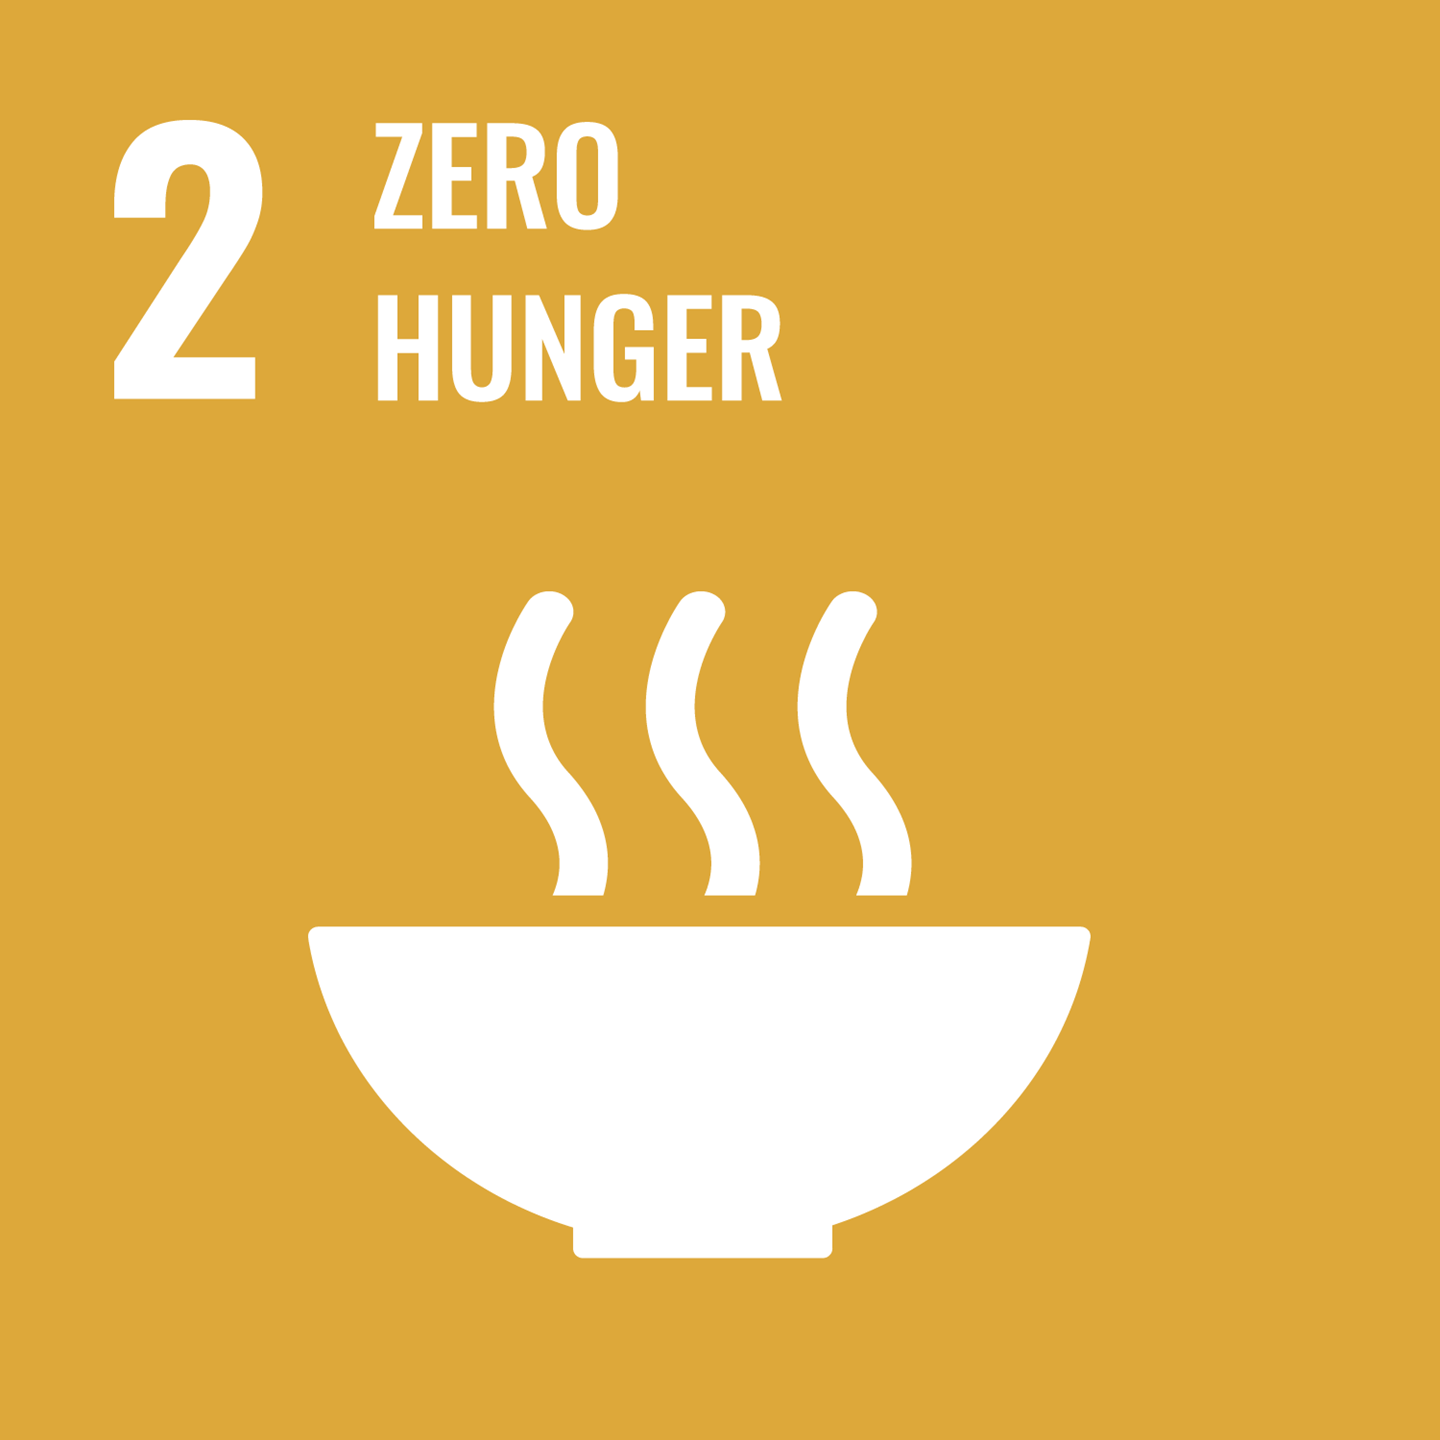 Sustainable Development Goal #2 - Zero Hunger